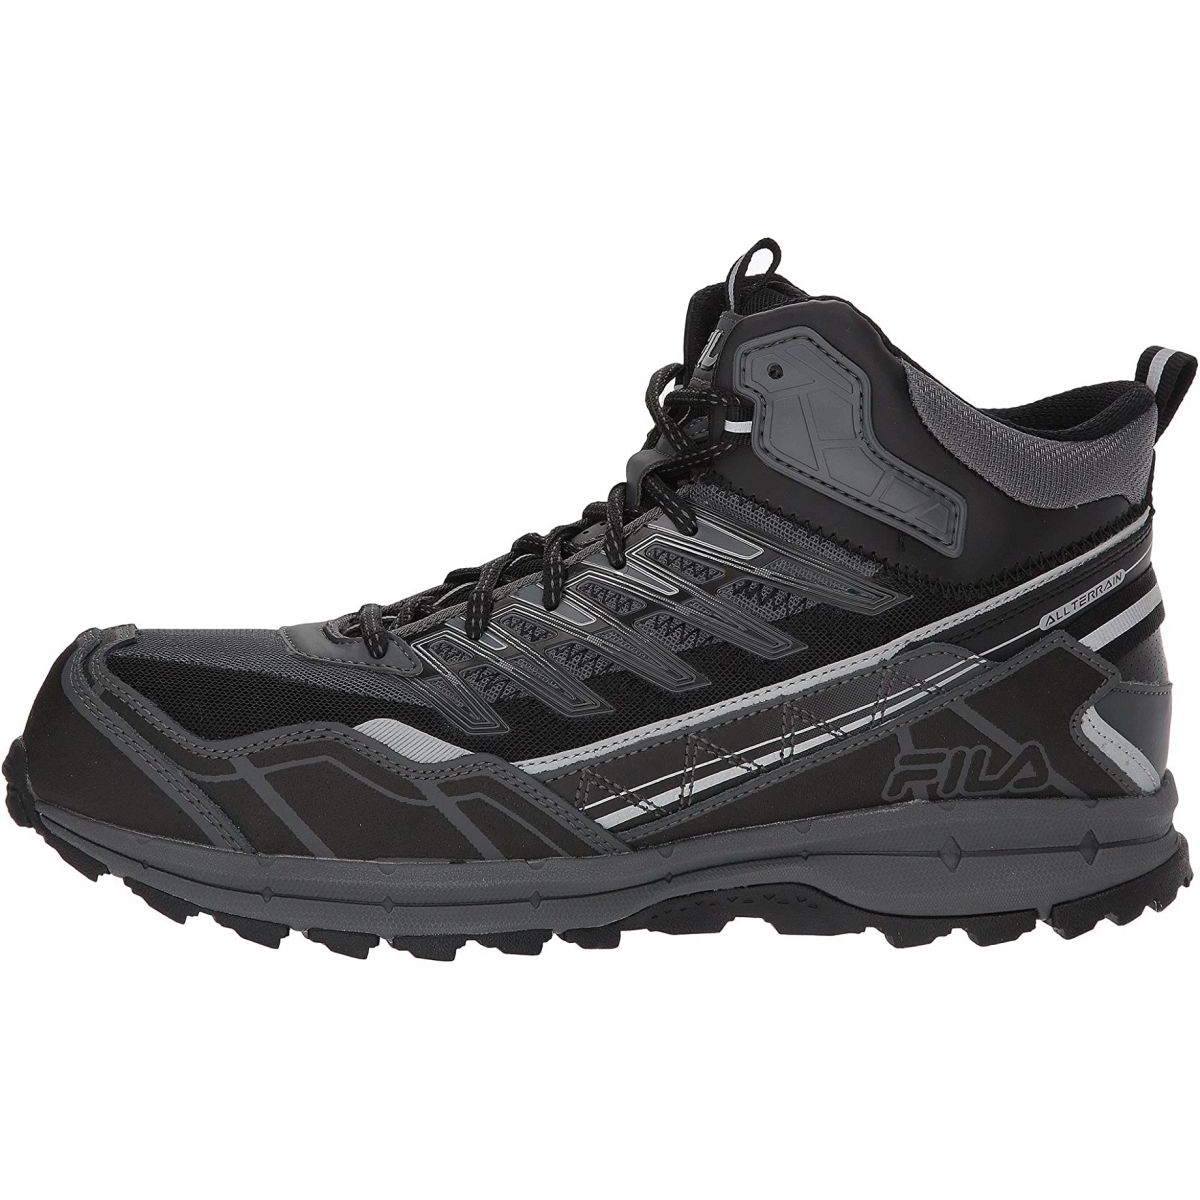 Fila Men's Hail Storm 3 Mid Composite Toe Trail Work Shoes Ct CSRK/BLK/MSIL - CSRK/BLK/MSIL, 10.5